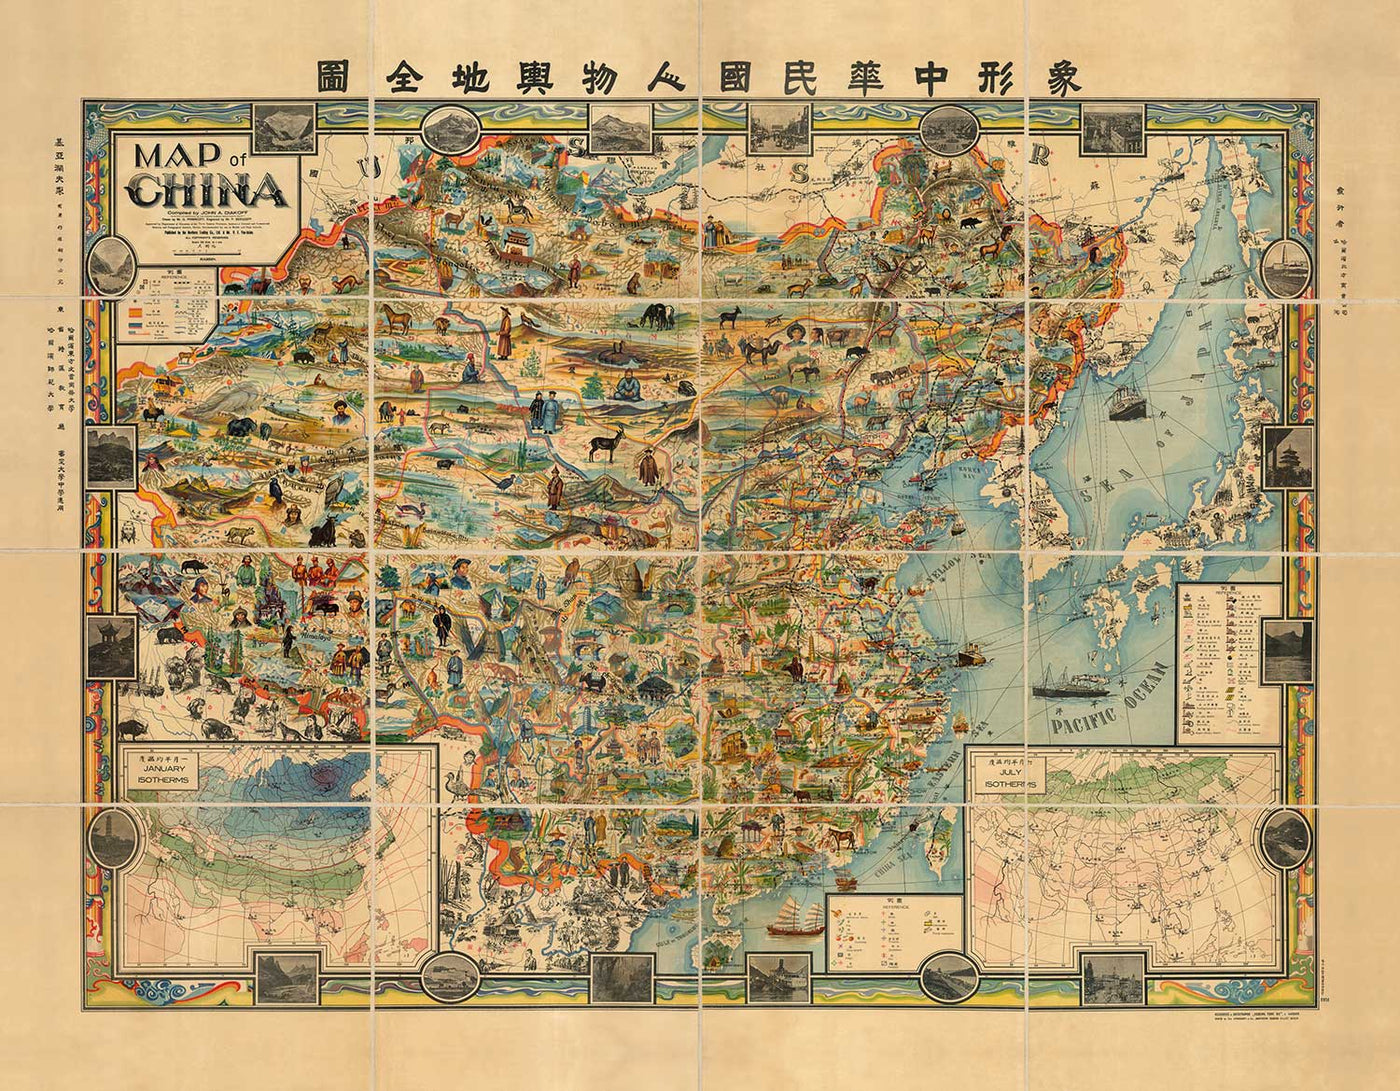 Rare Old Pictorial Map of China in 1931 by G Primakoff - Taiwan, Hainan, Hong Kong, Hanoi, Liaoning